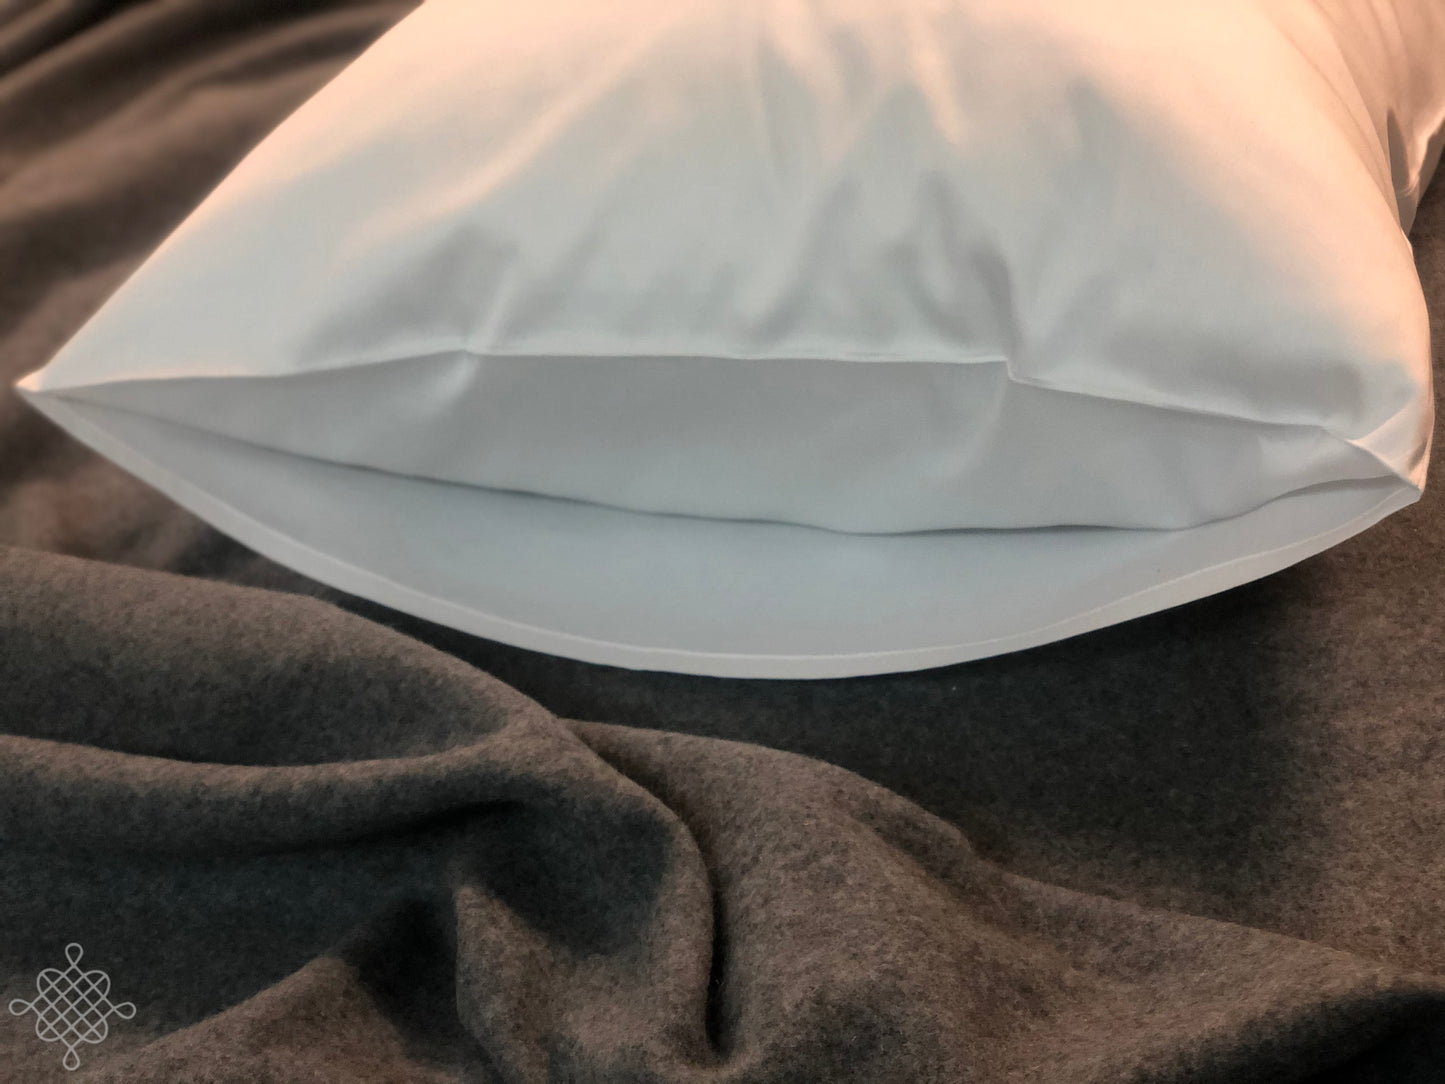 Kearsley White 300tc Soleil Sateen Envelope Closure Pillow Protector